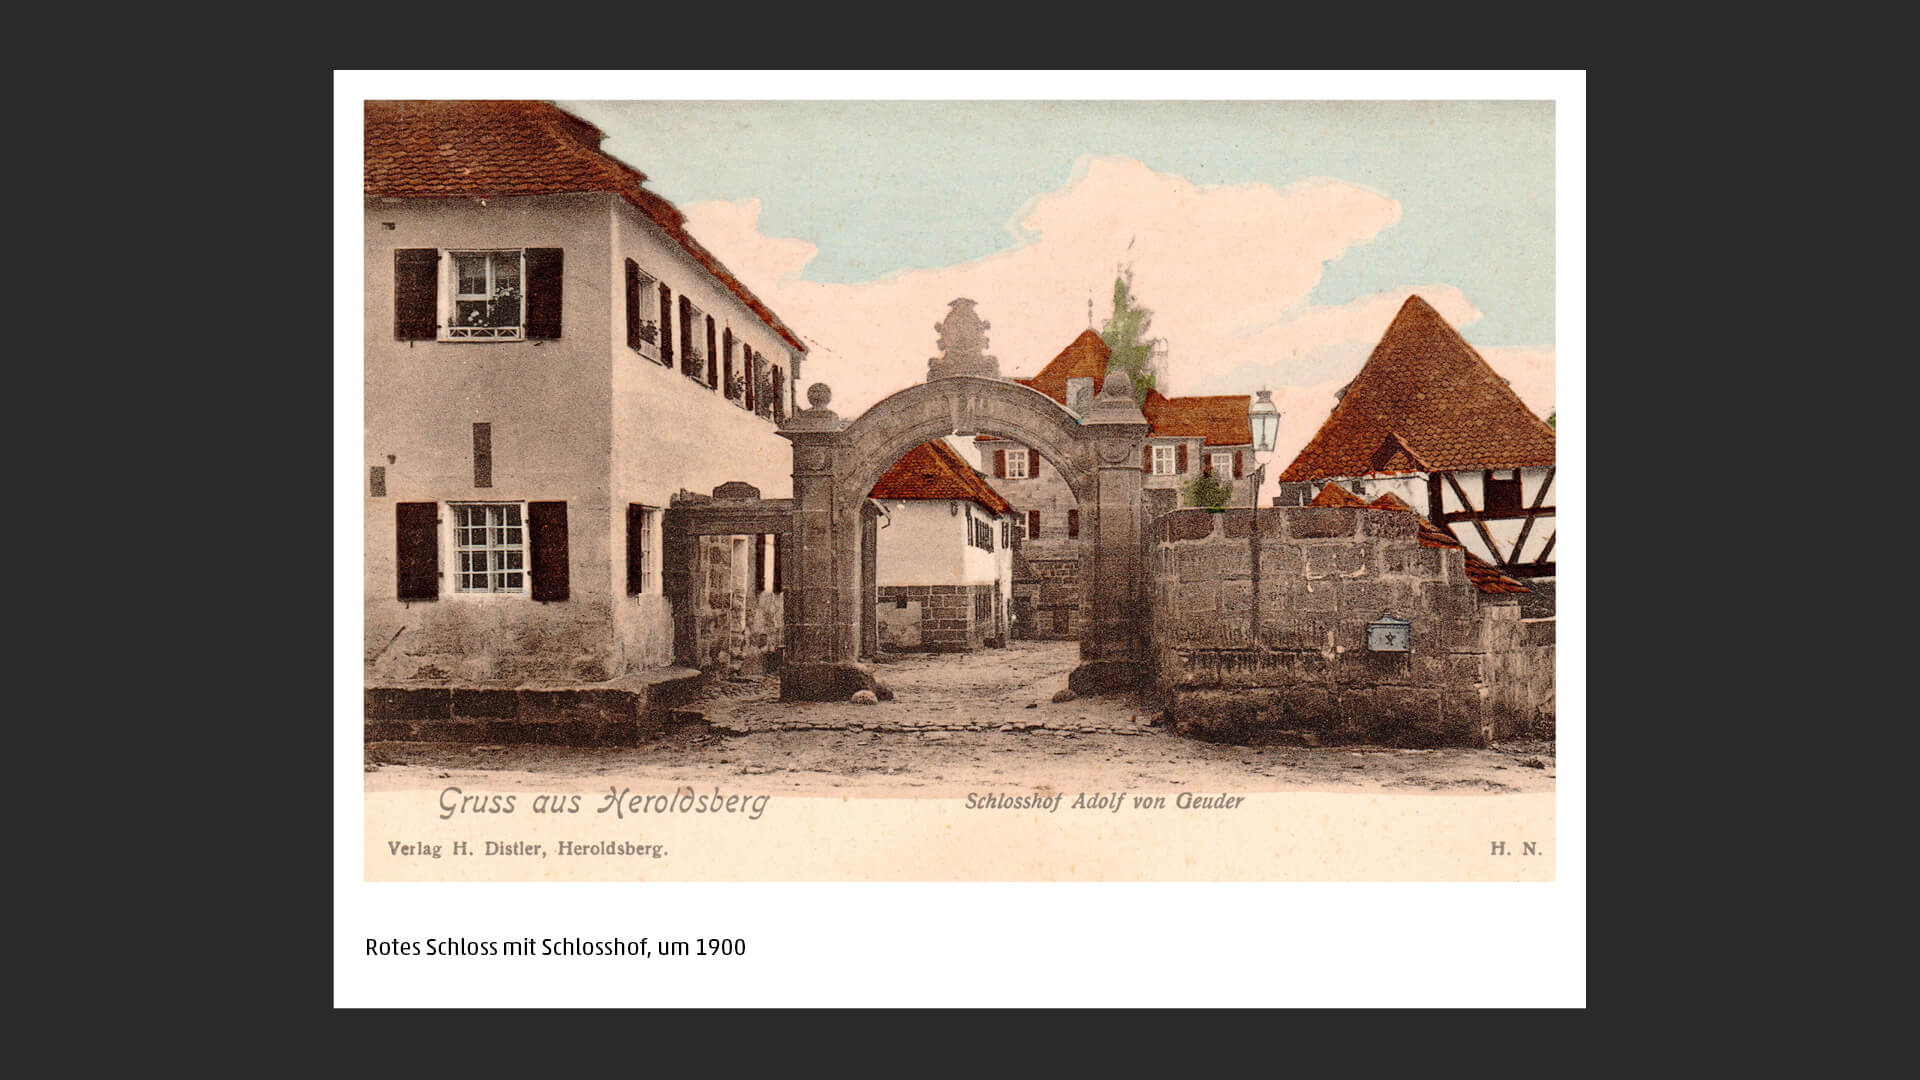 Rotes Schloss mit Schlosshof, Heroldsberg, um 1900